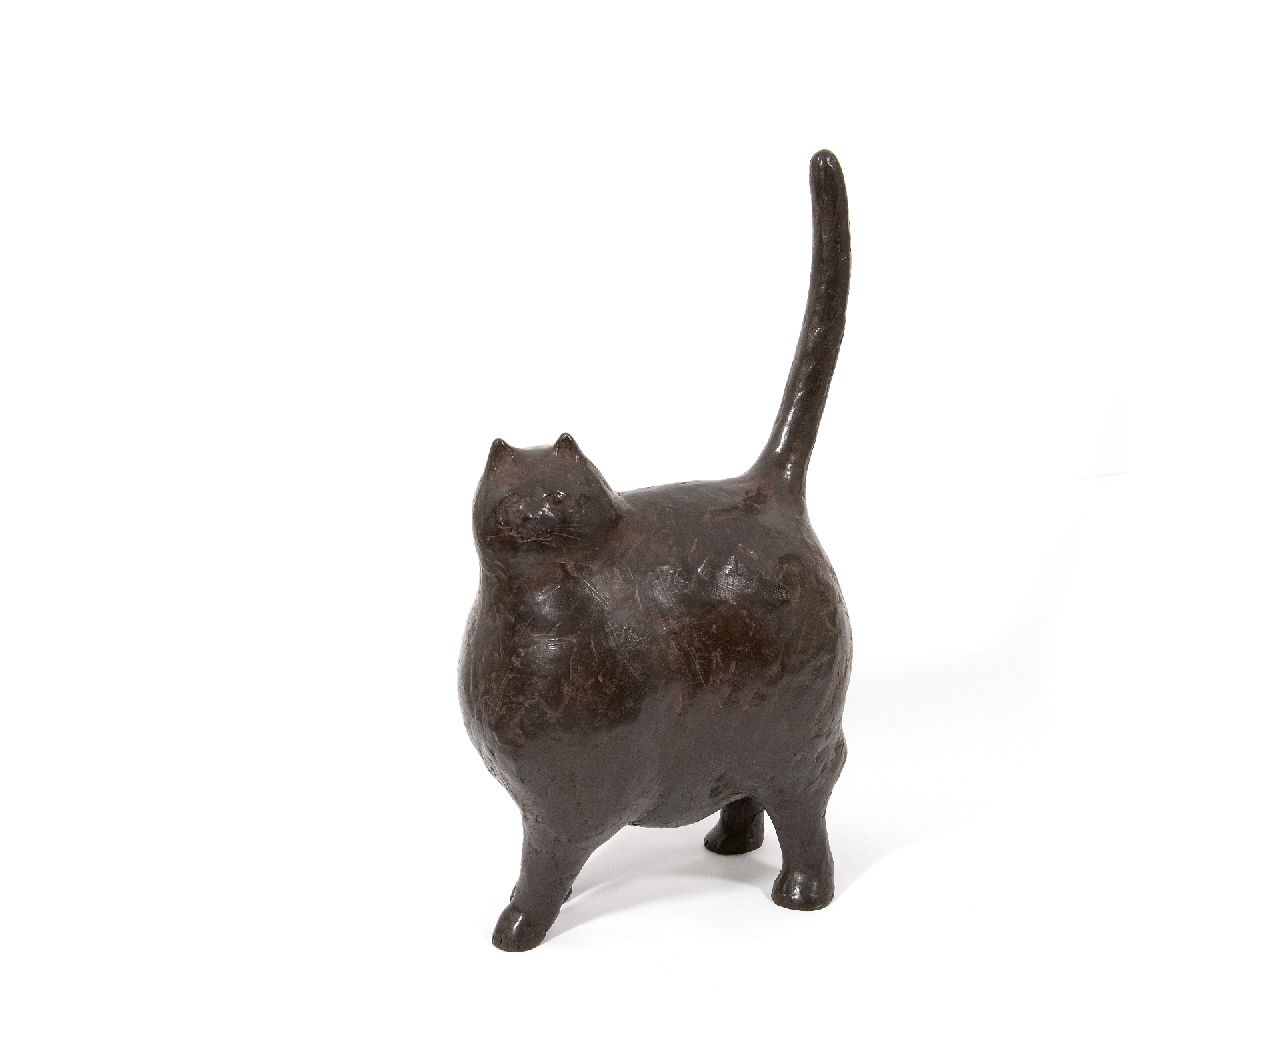 Hemert E. van | Evert van Hemert, The new cat, bronze 54.0 cm, signed under the tail and made in 2012